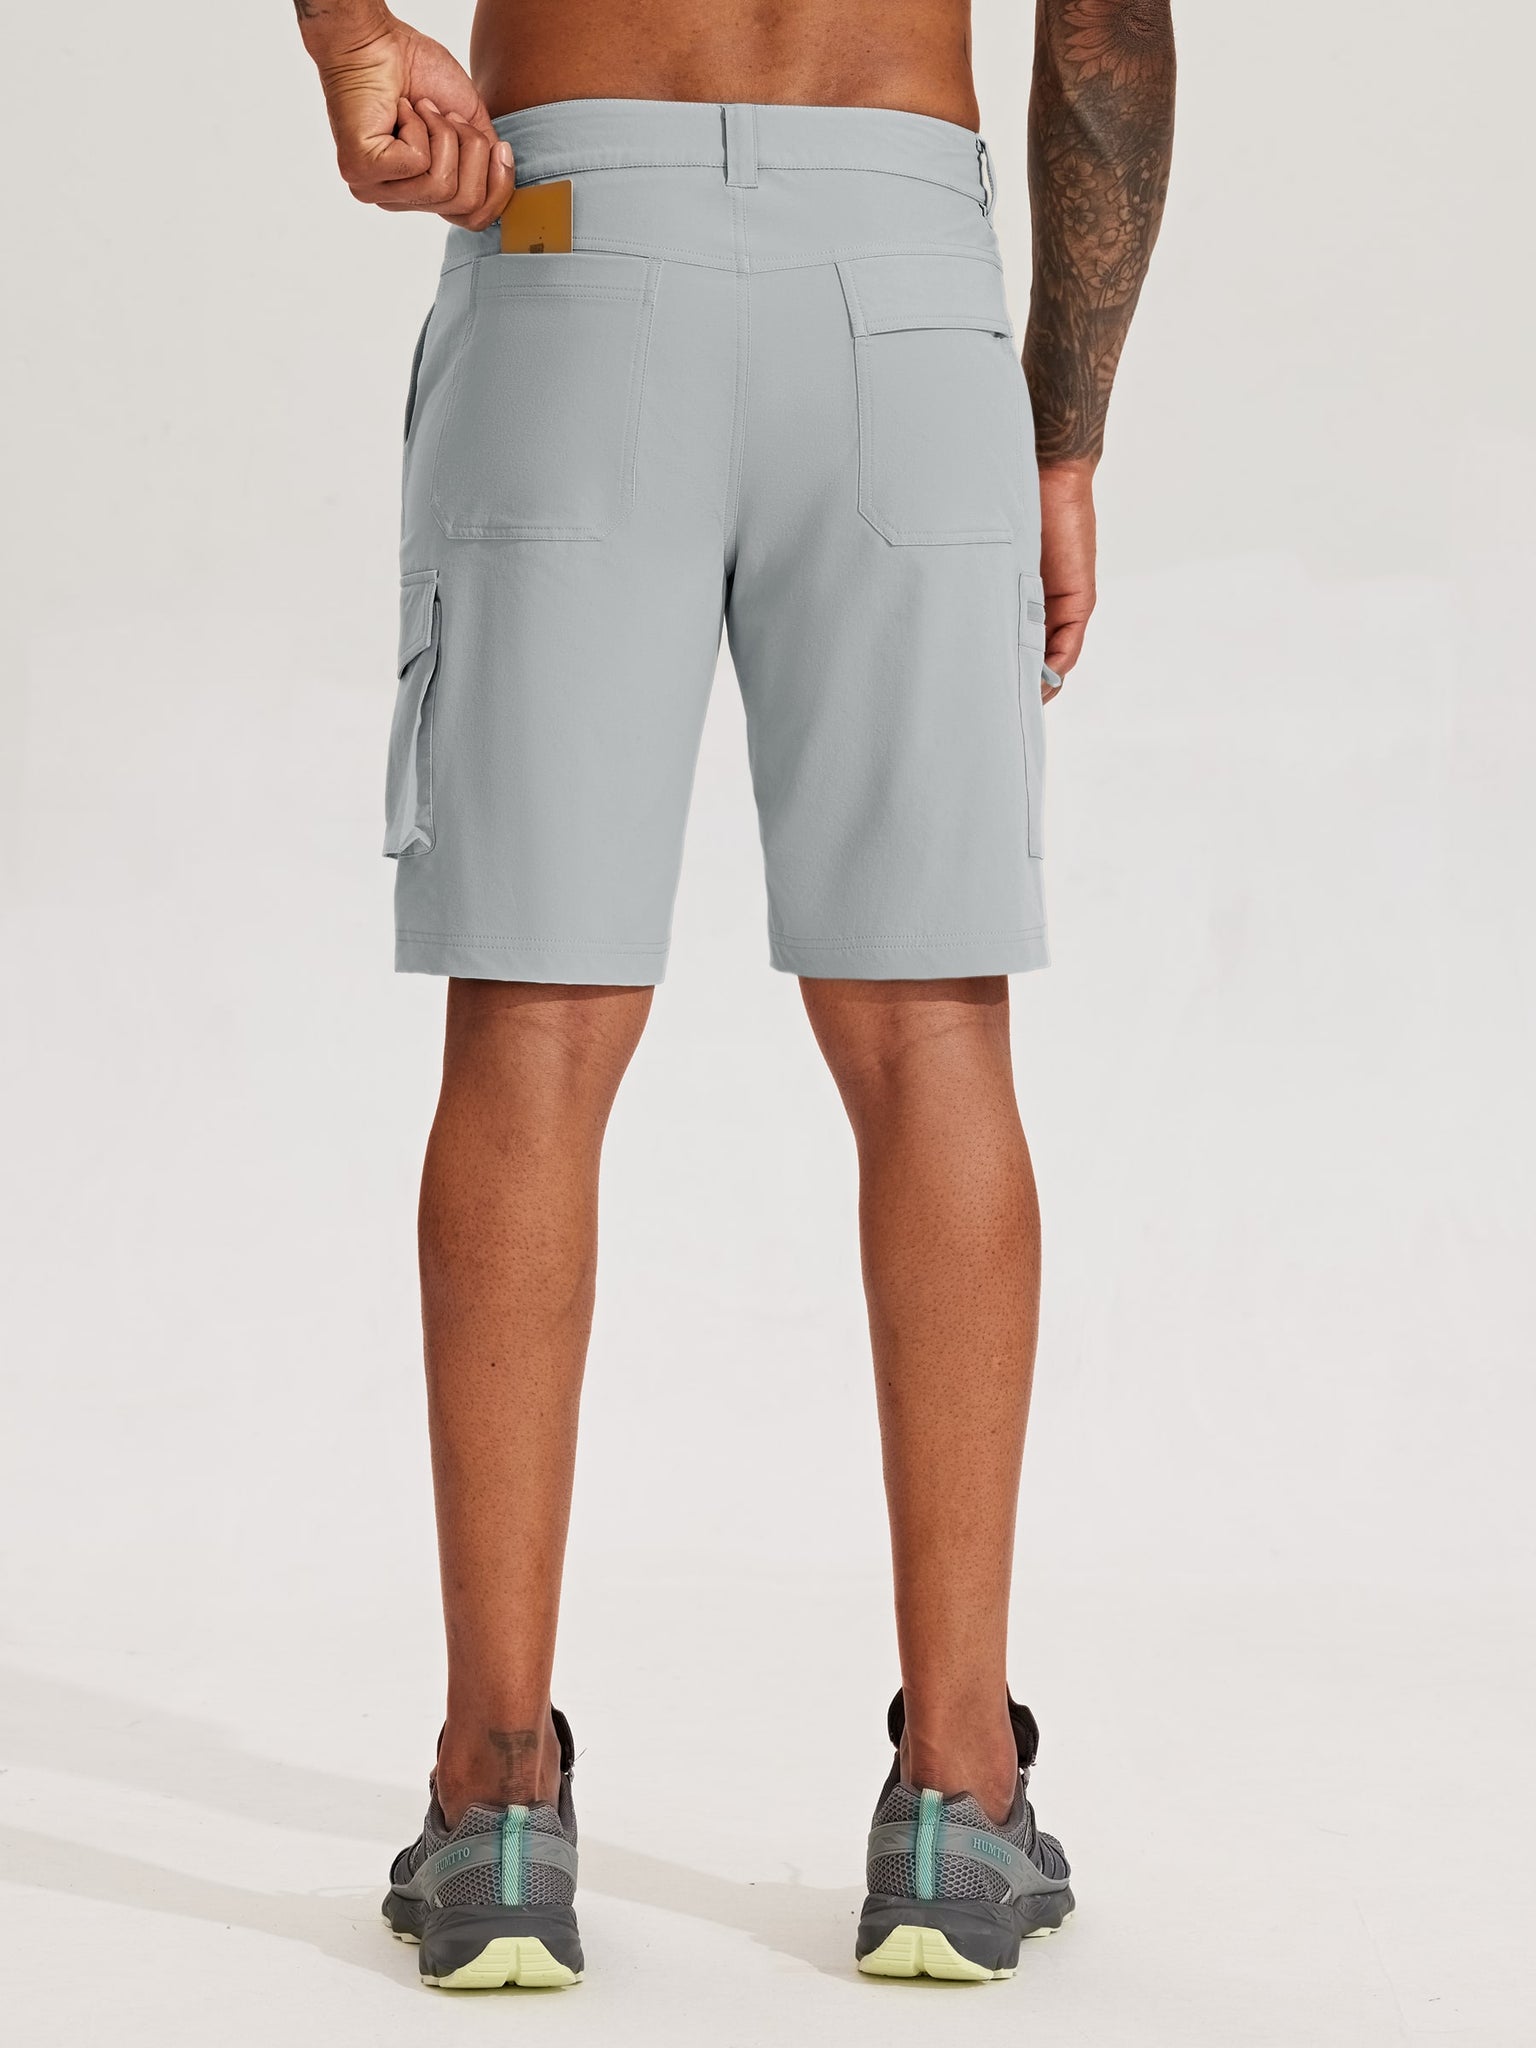 Men's Stretch Cargo Shorts 9 Inch_Gray2